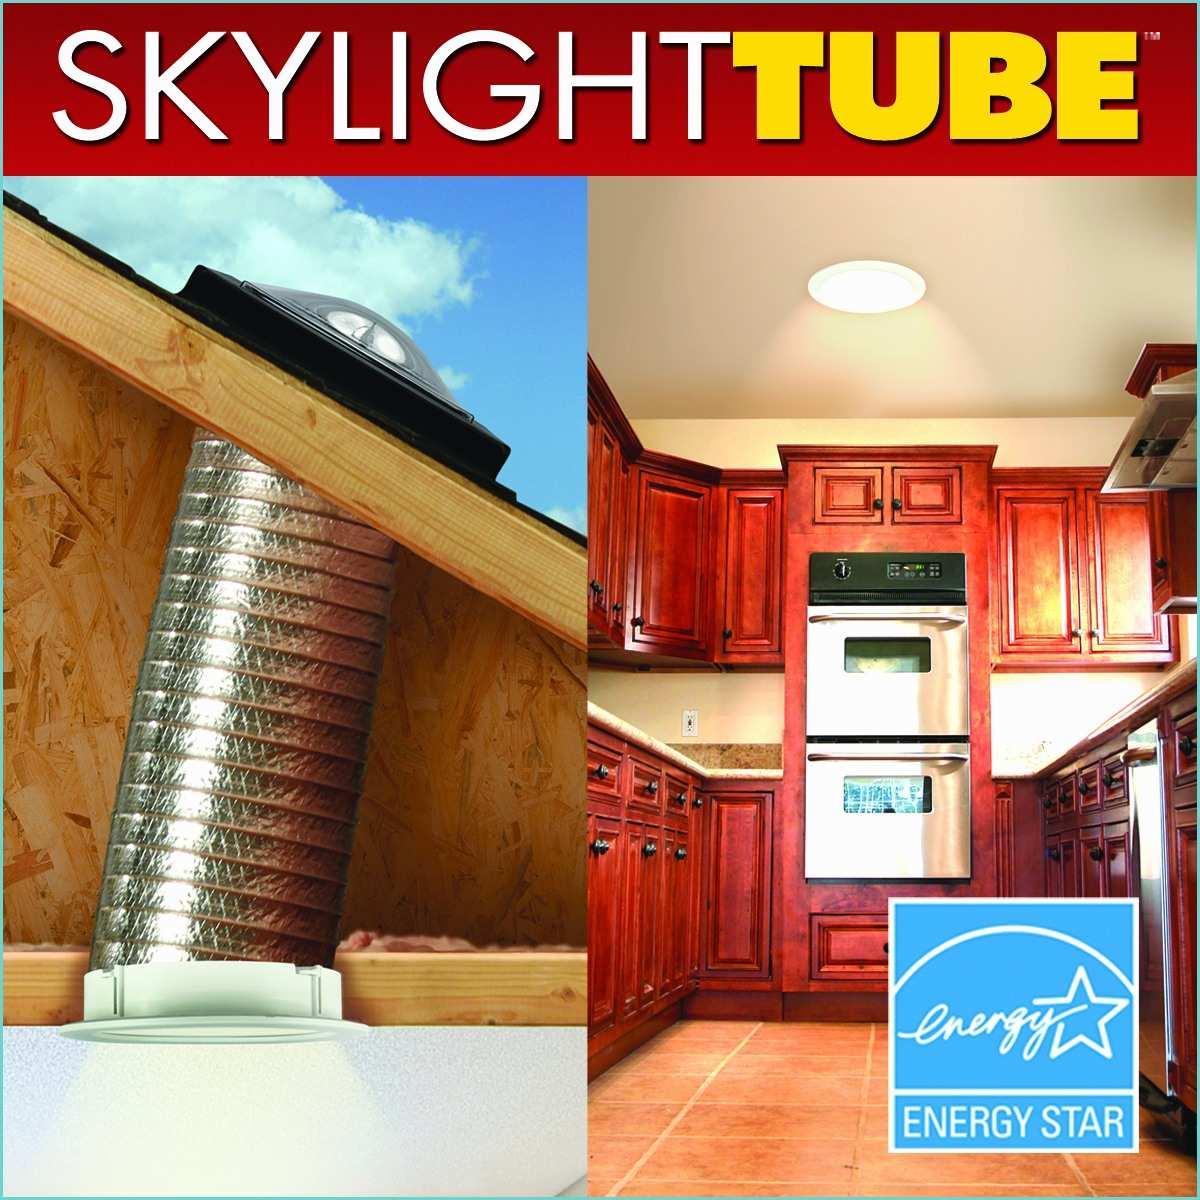 Skylight Tube Costco U S Sunlight’s solar attic Fan and Skylight Tube